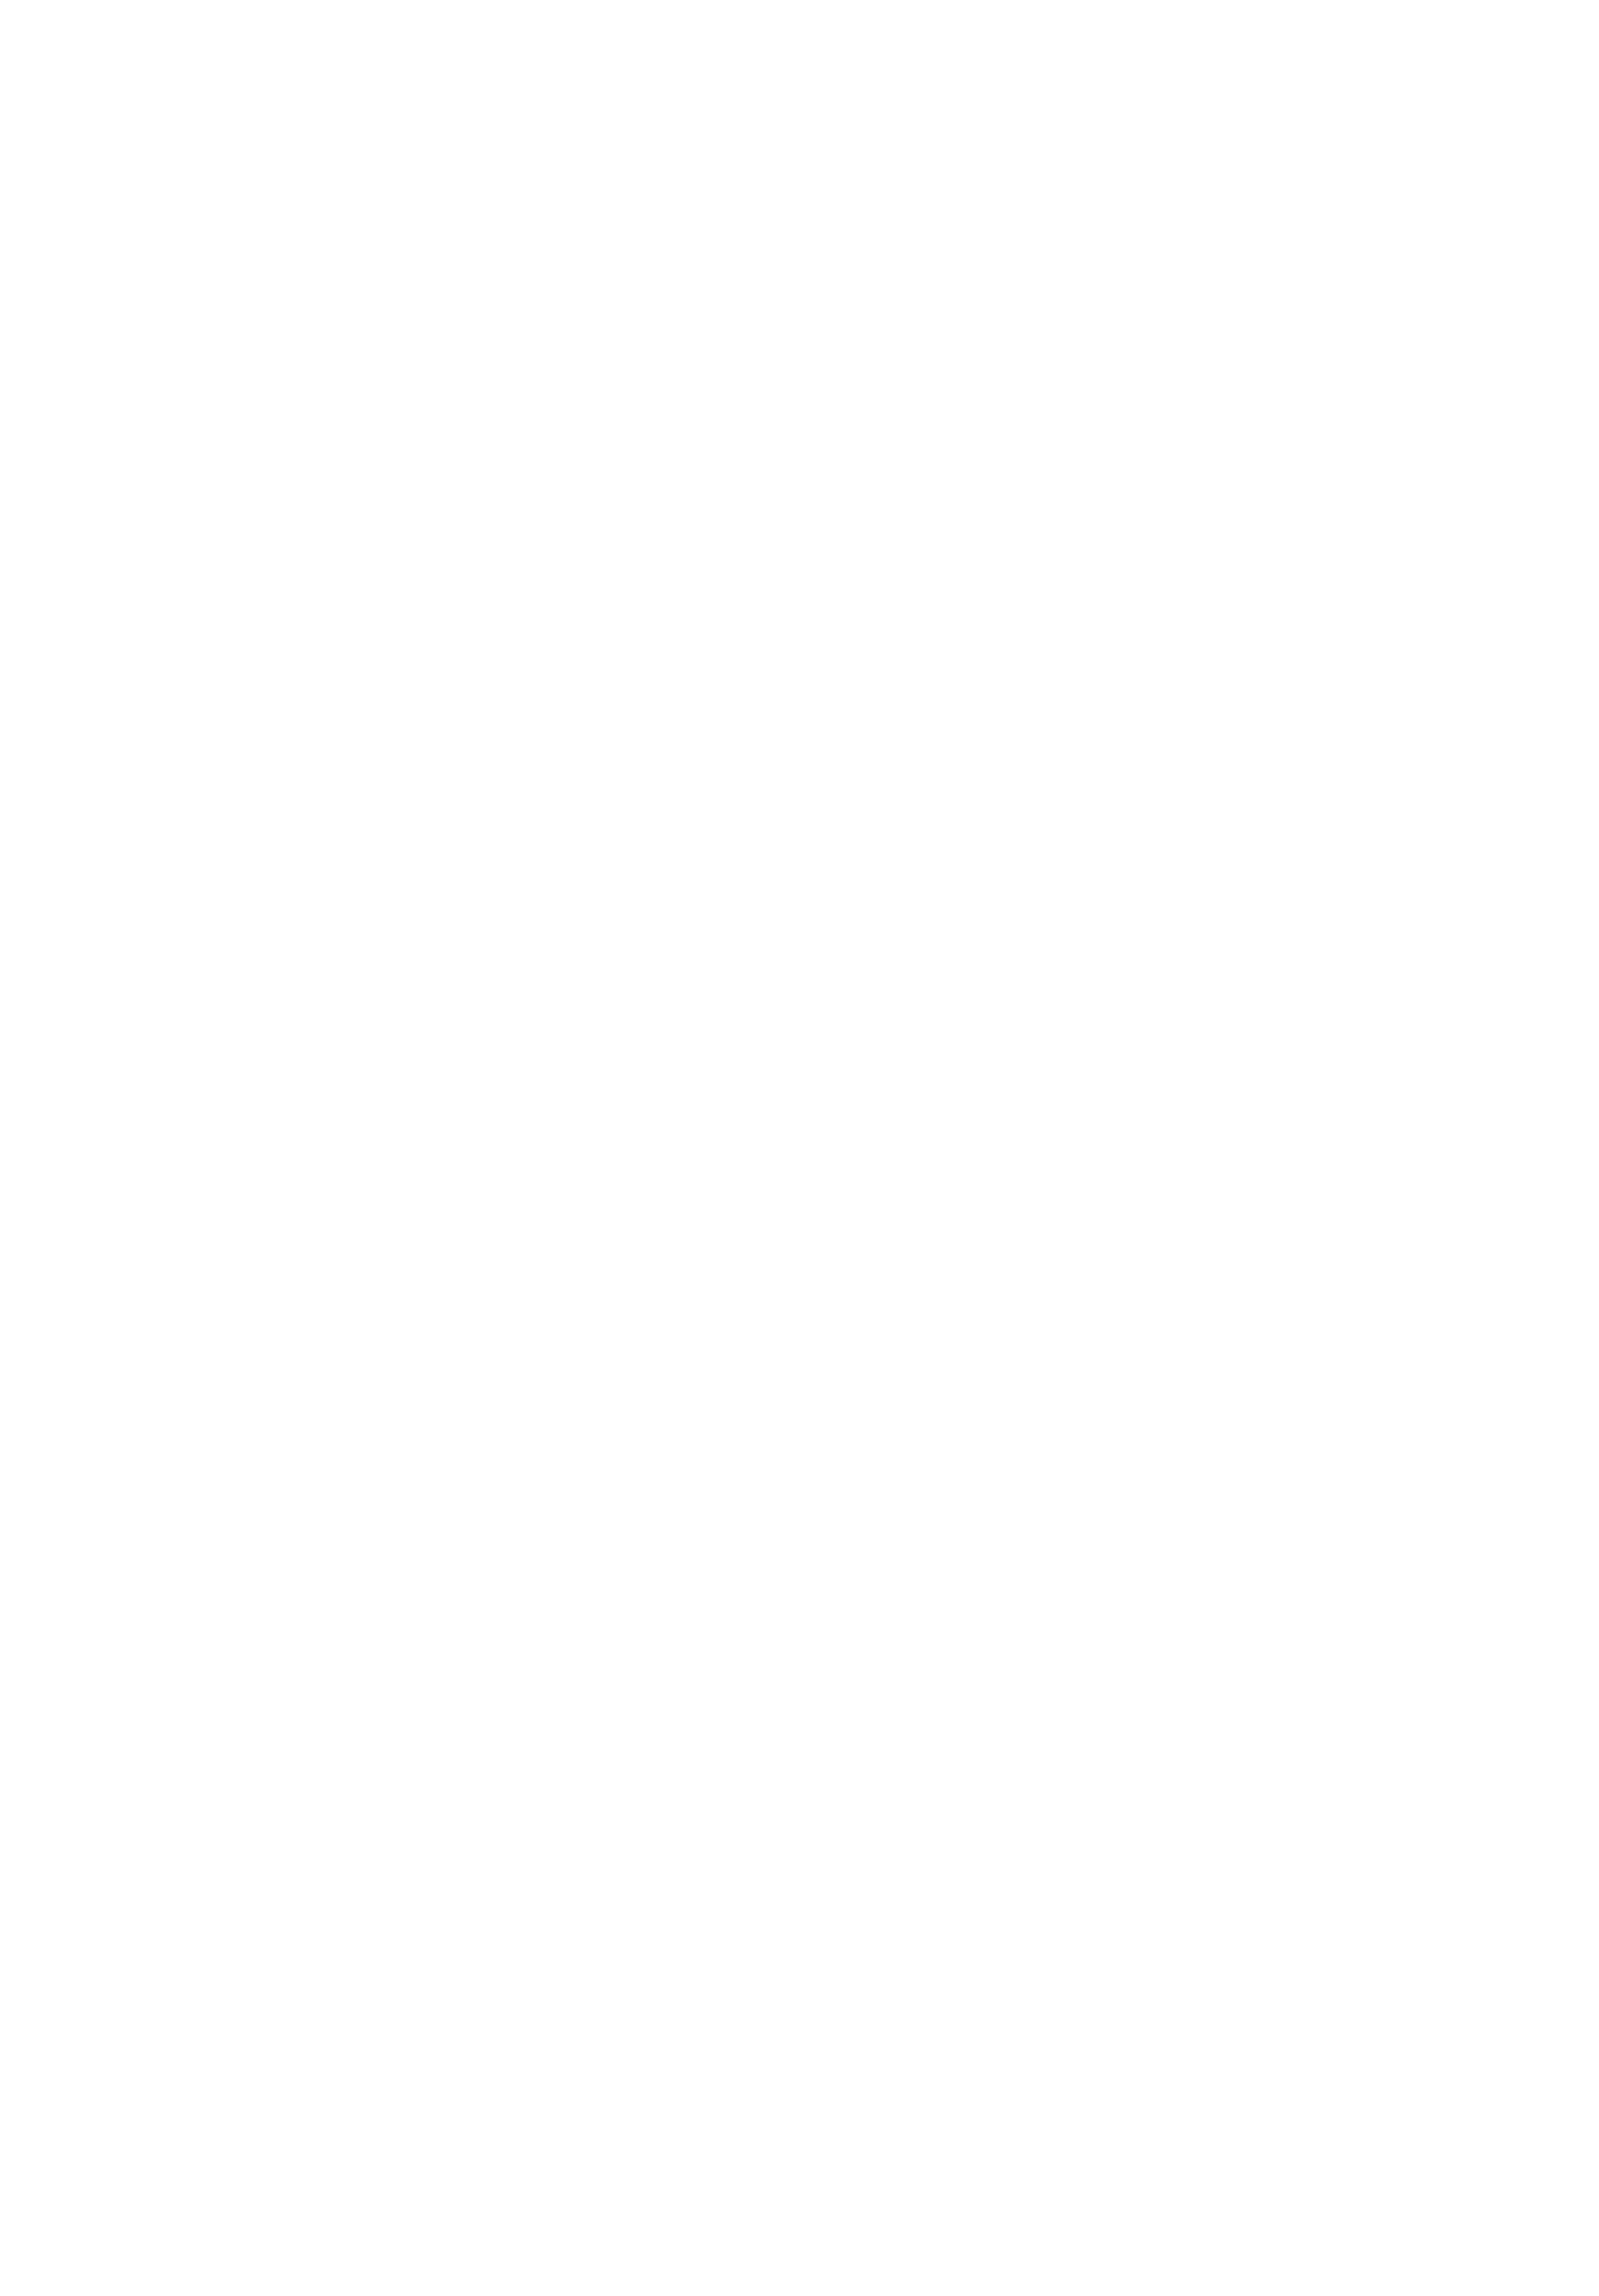 Вязаный джемпер из кидмохера на шёлке по картине Моне "Парусная лодка" бренда "Таня Исаева"